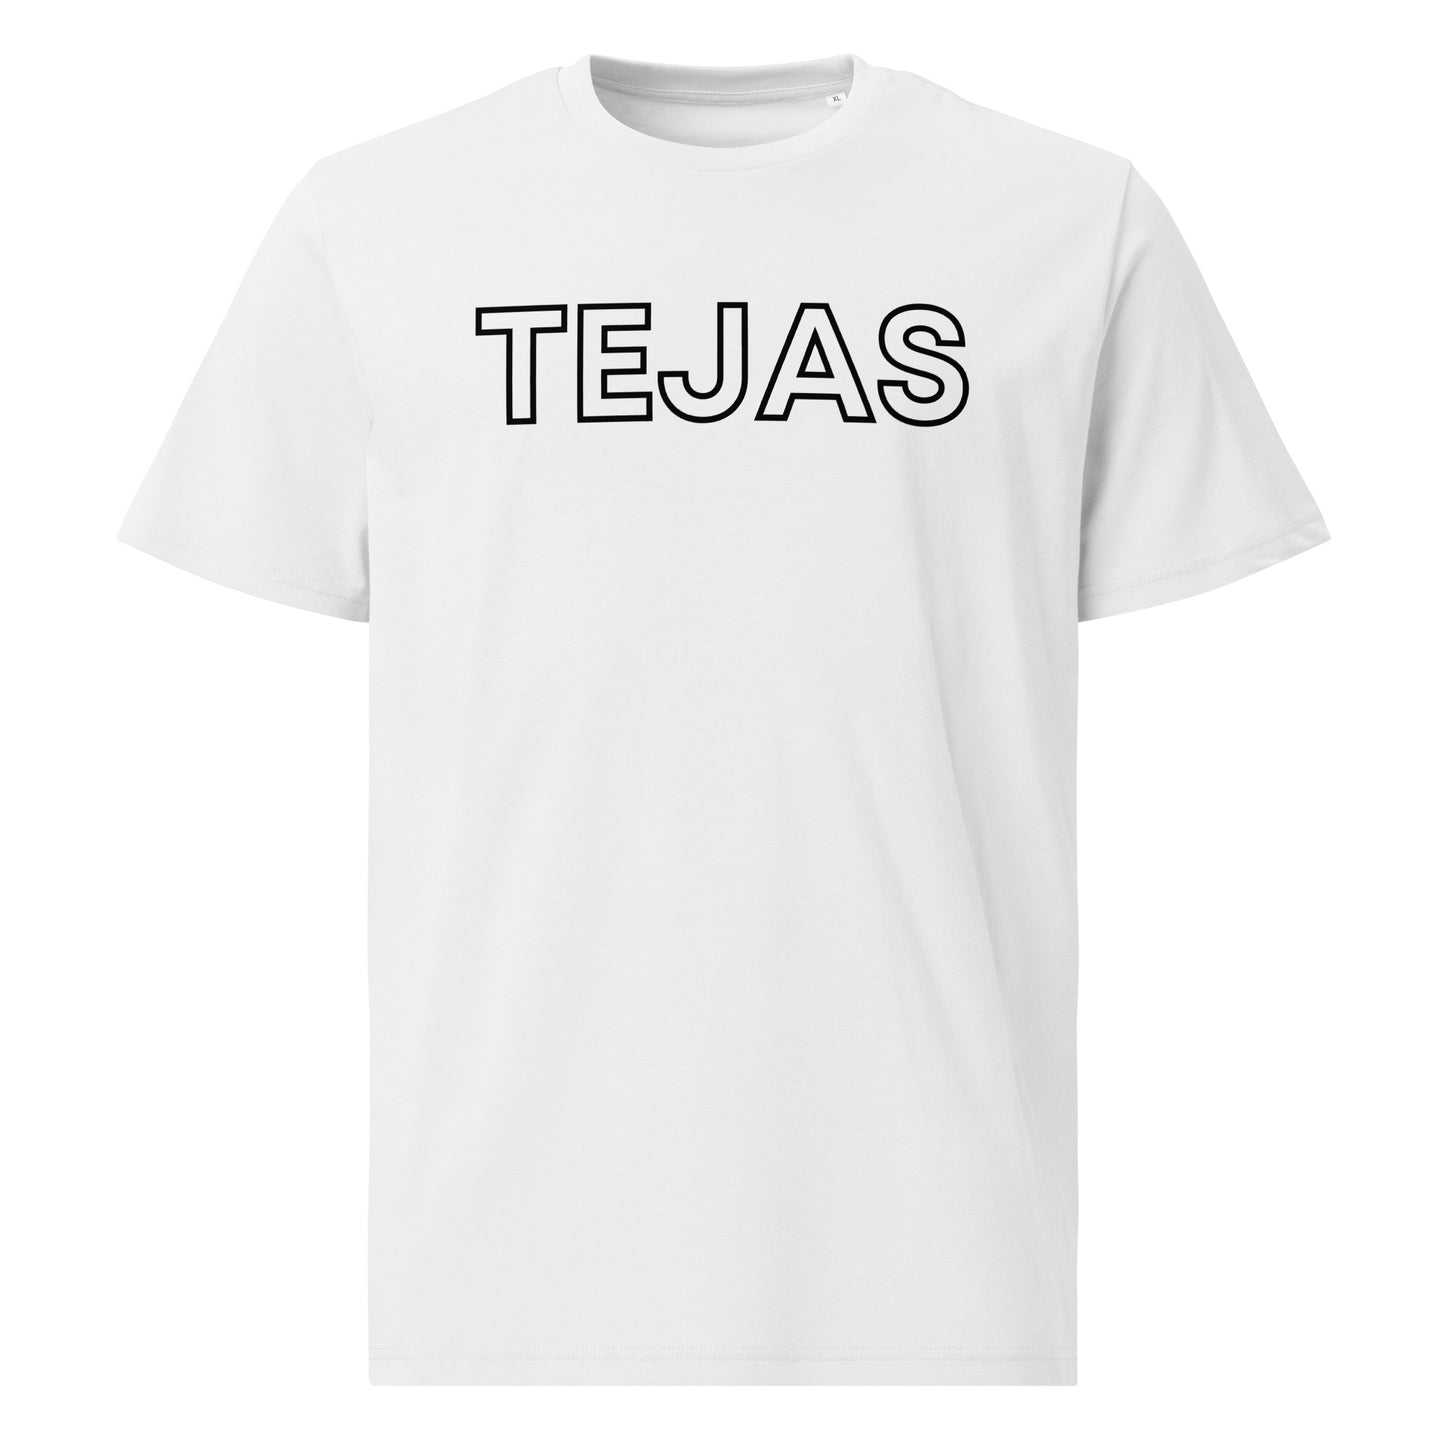 Tejas - Unisex organic cotton t-shirt